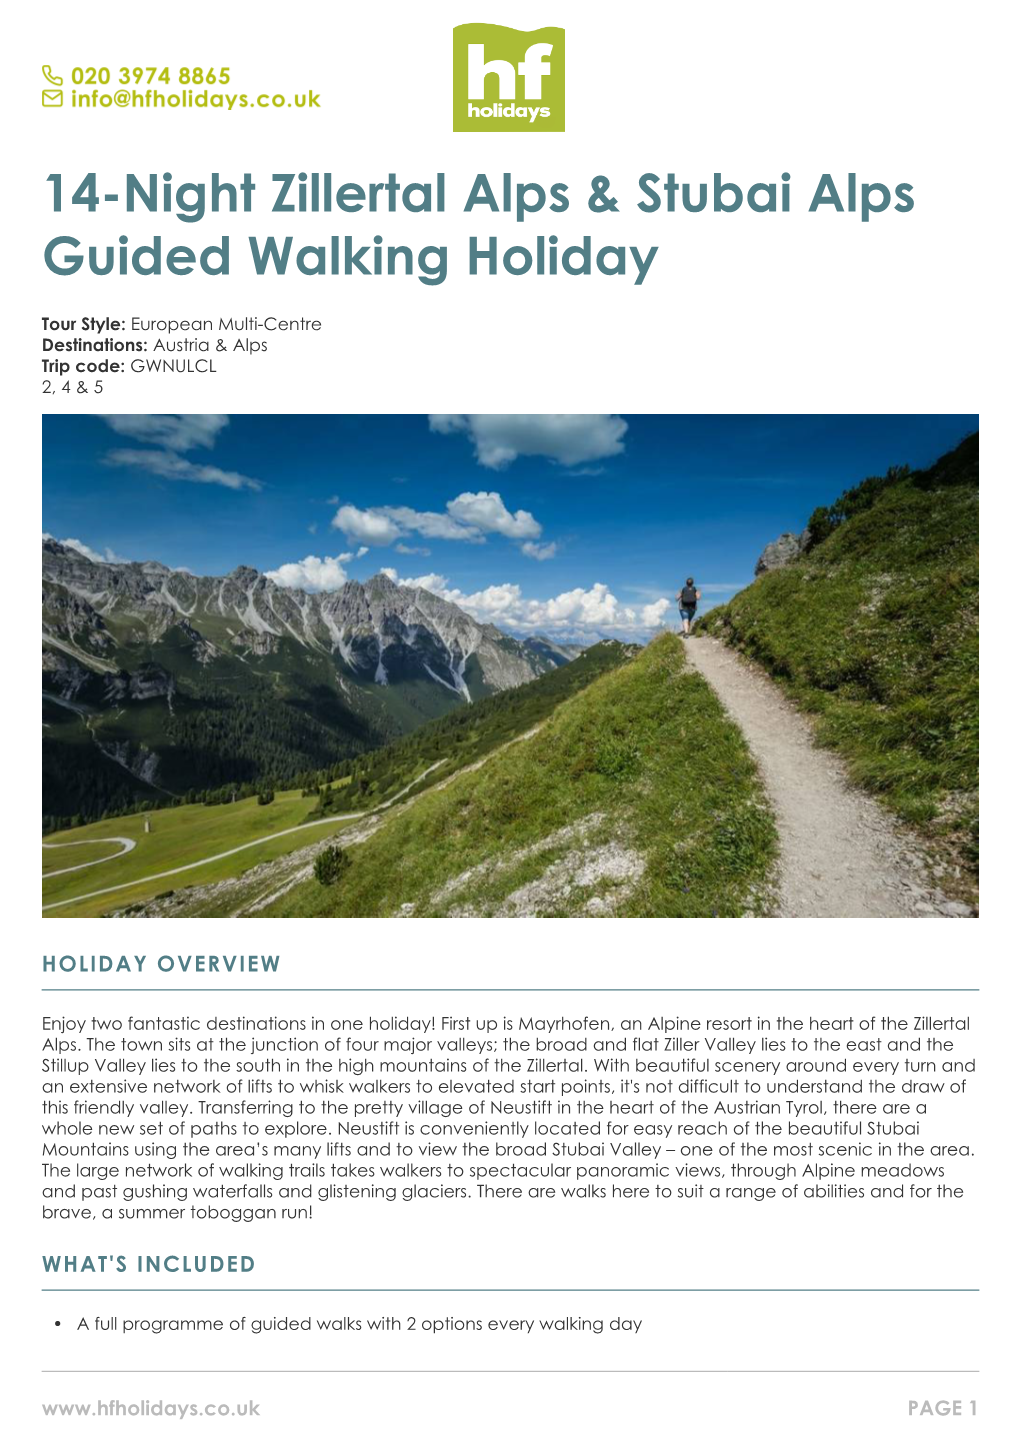 14-Night Zillertal Alps & Stubai Alps Guided Walking